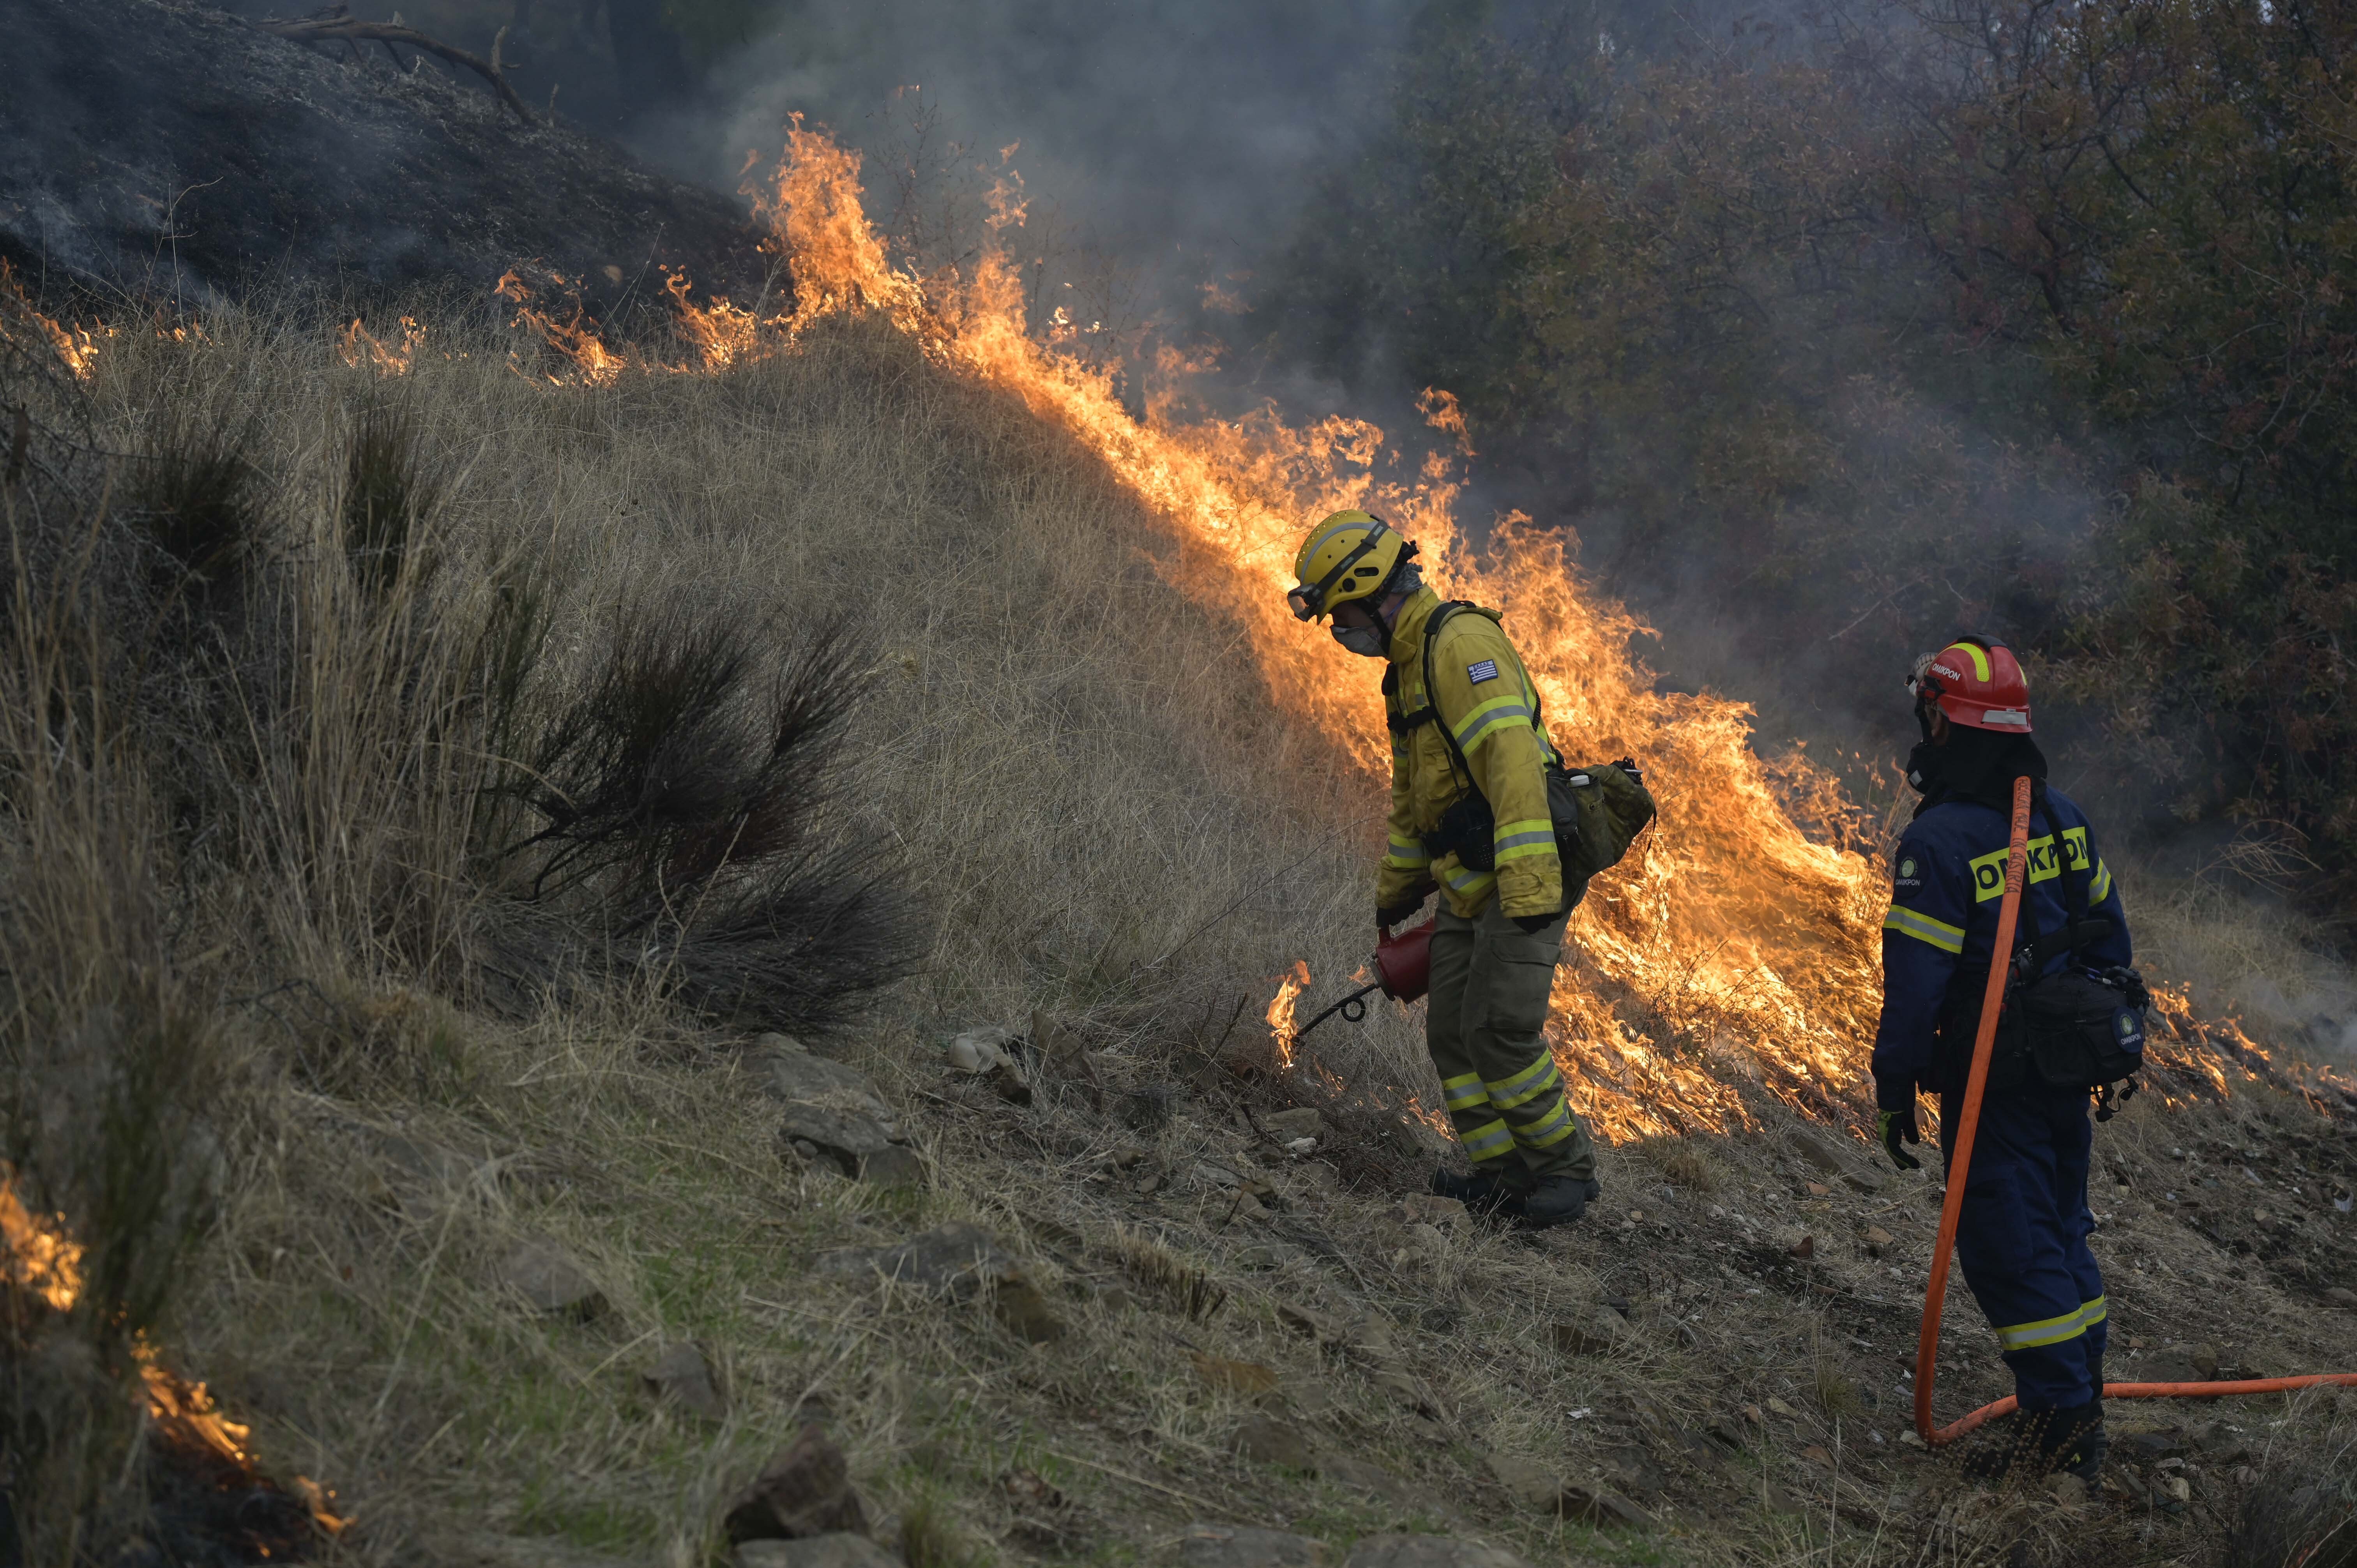 More information about "Πιλοτικό έργο προδιαγεγραμμένης καύσης στην Χίο, για την πρόληψη δασικών πυρκαγιών"